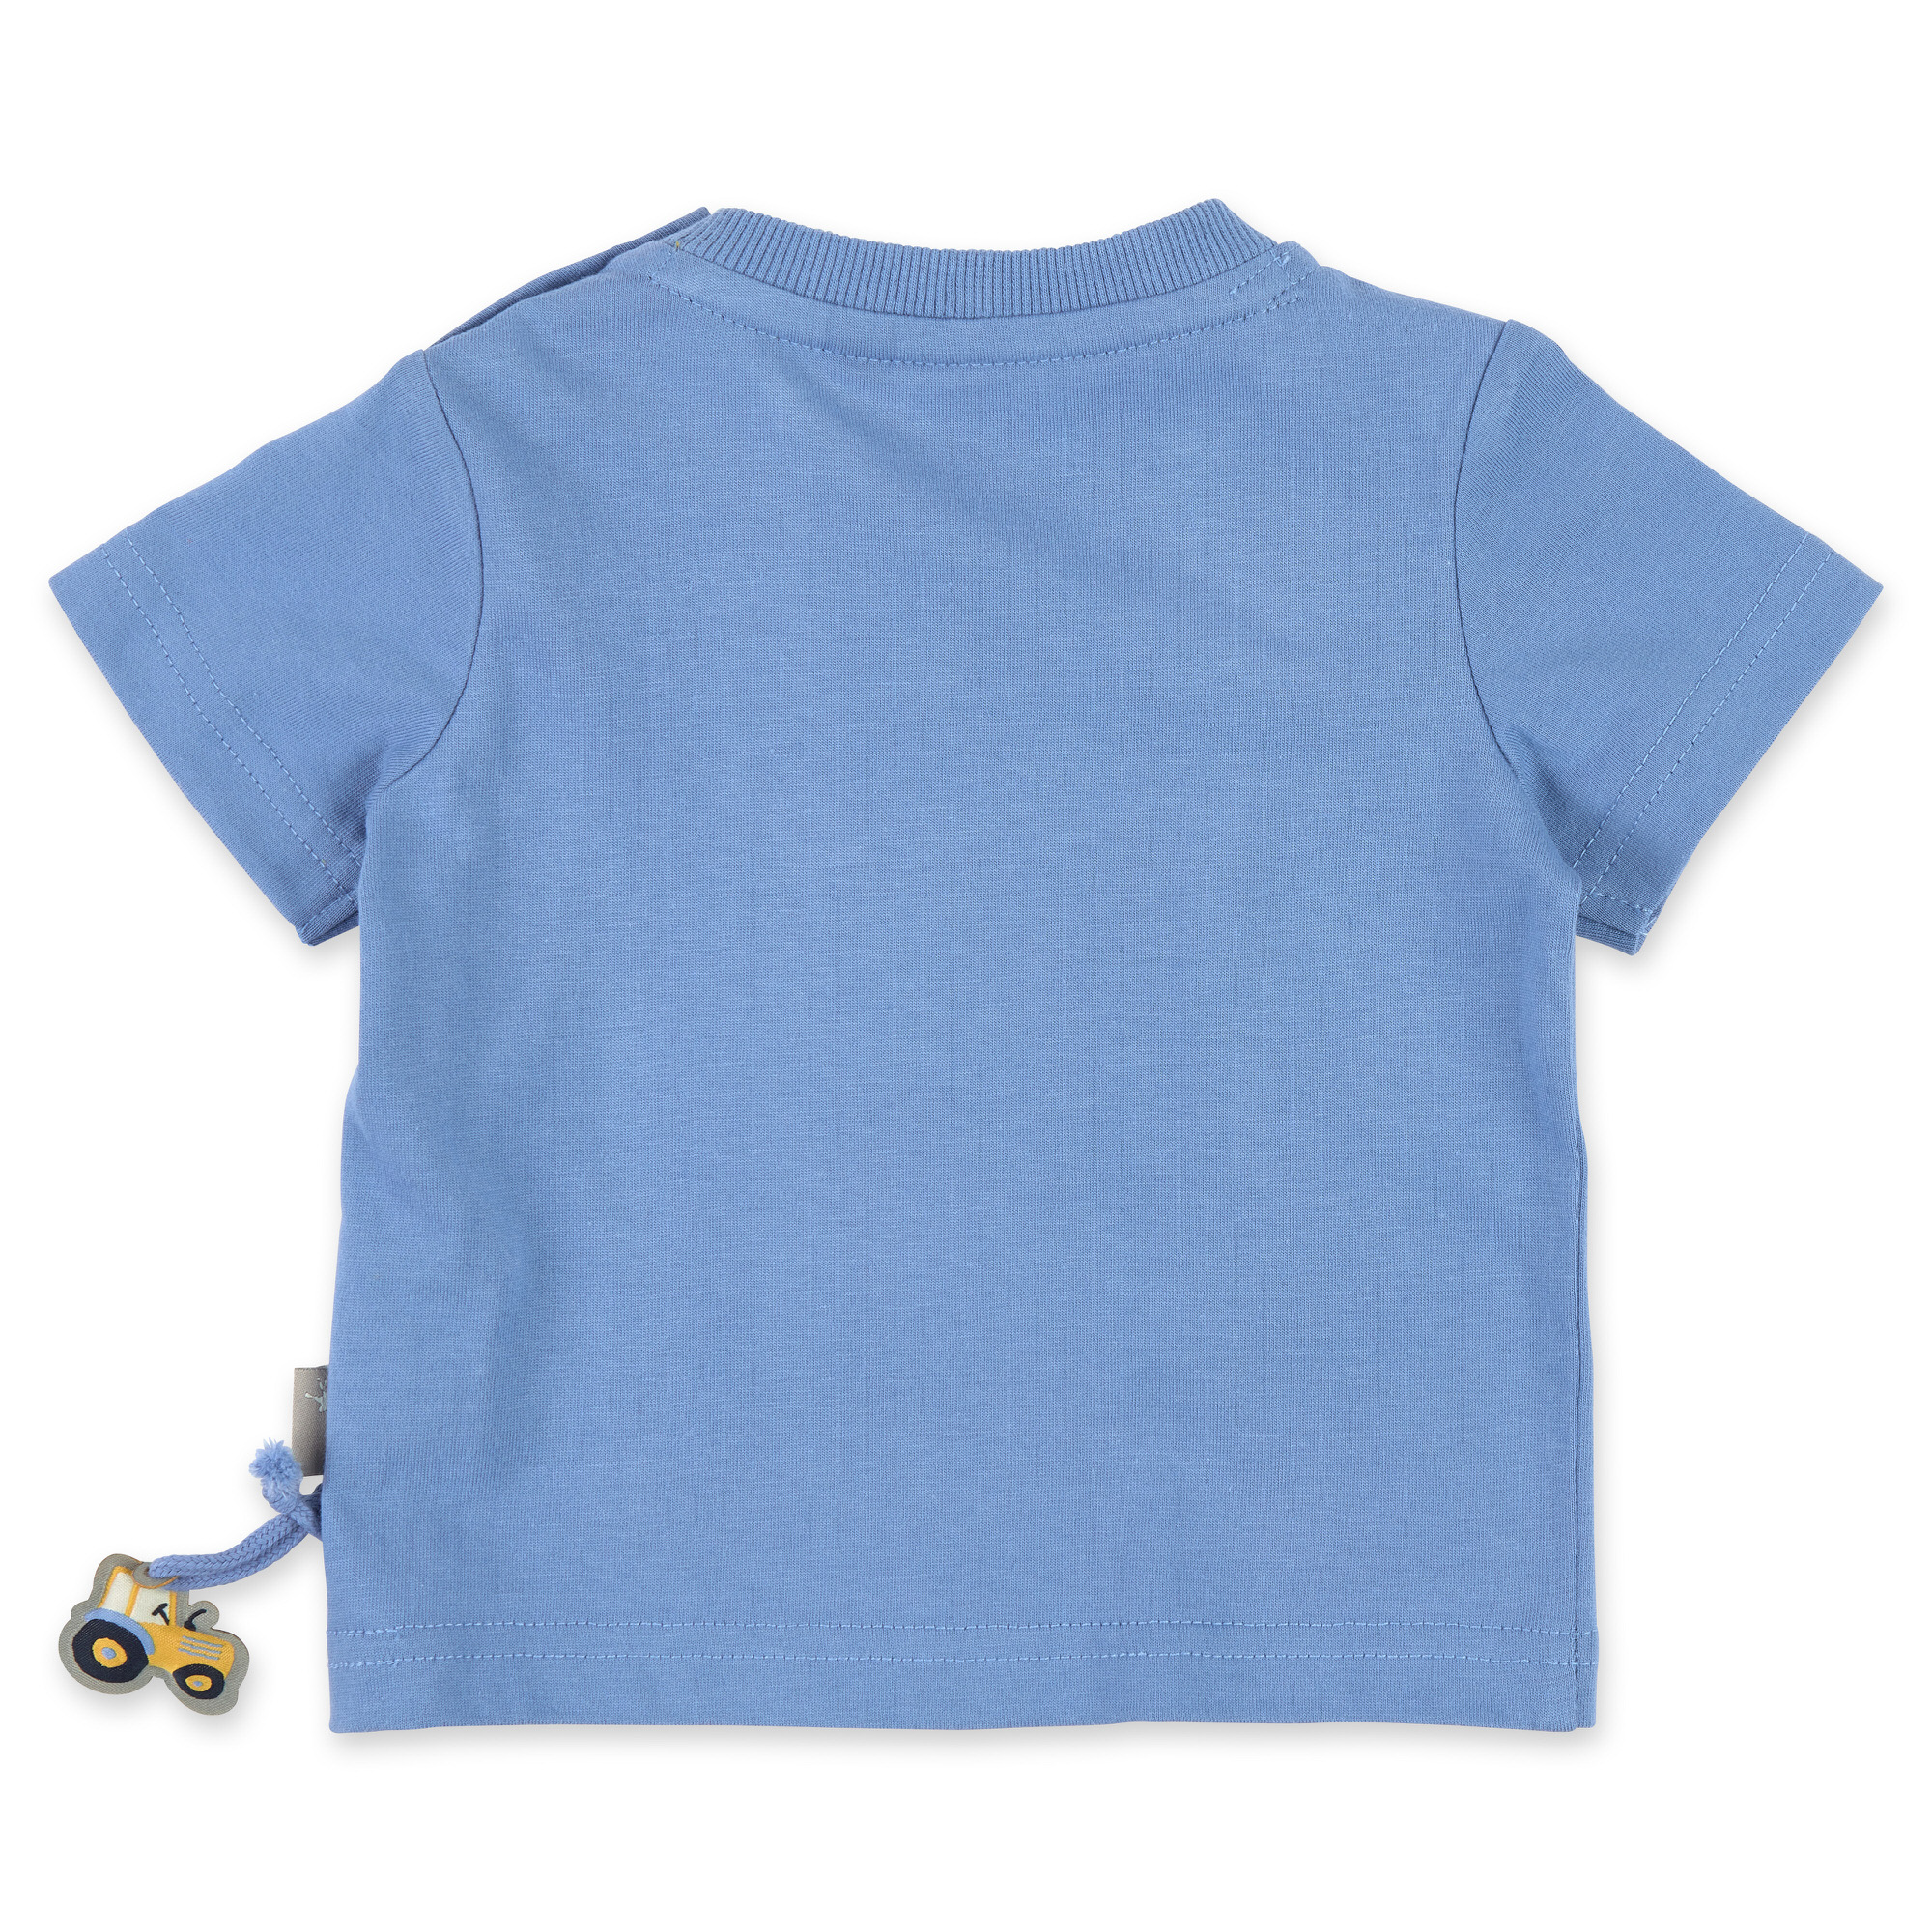 Tractor baby short sleeve Tee, blue